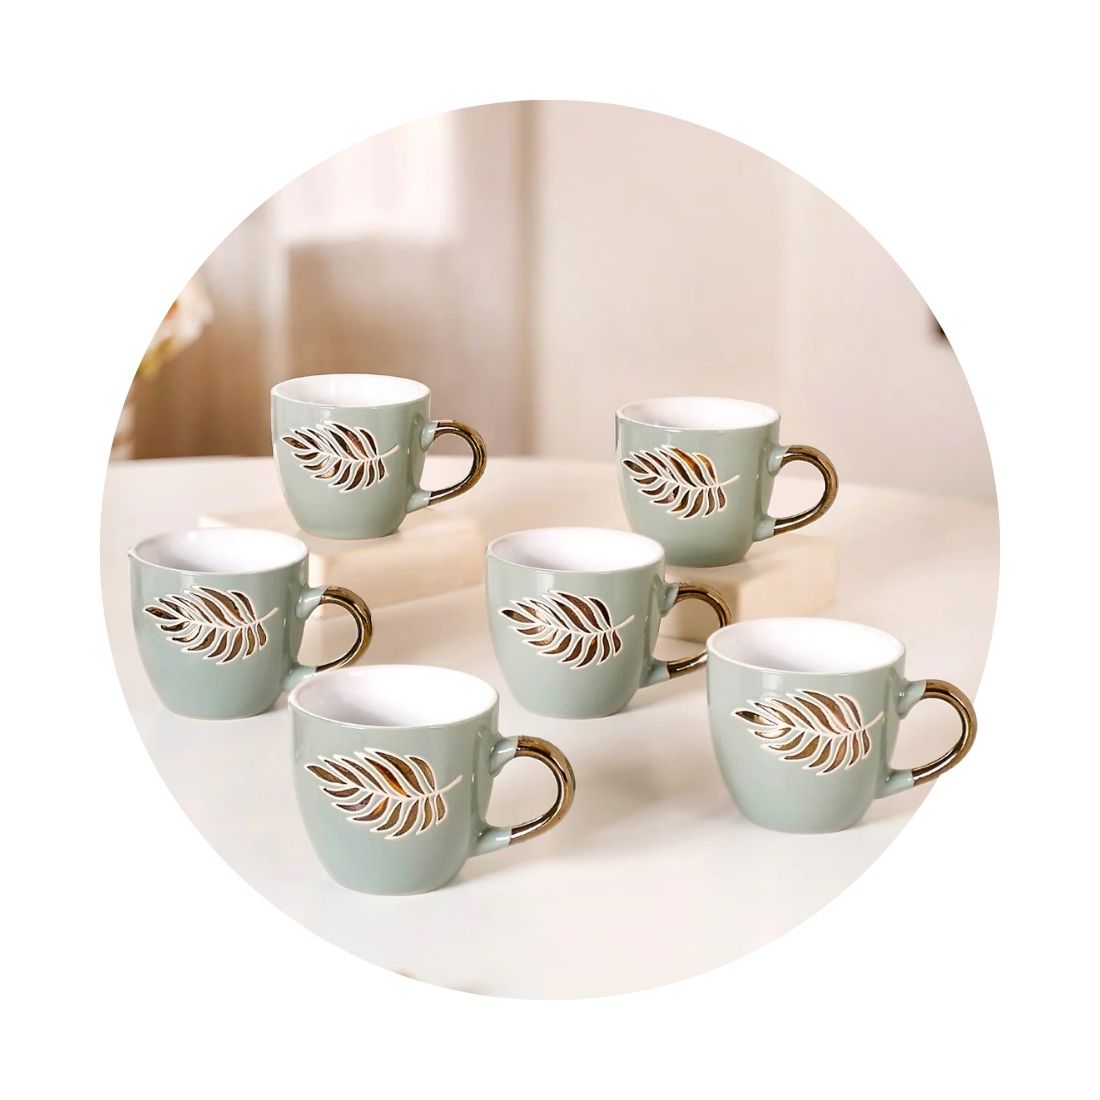 Premium Cups & Mugs - Luxurious Cups & Mugs Online